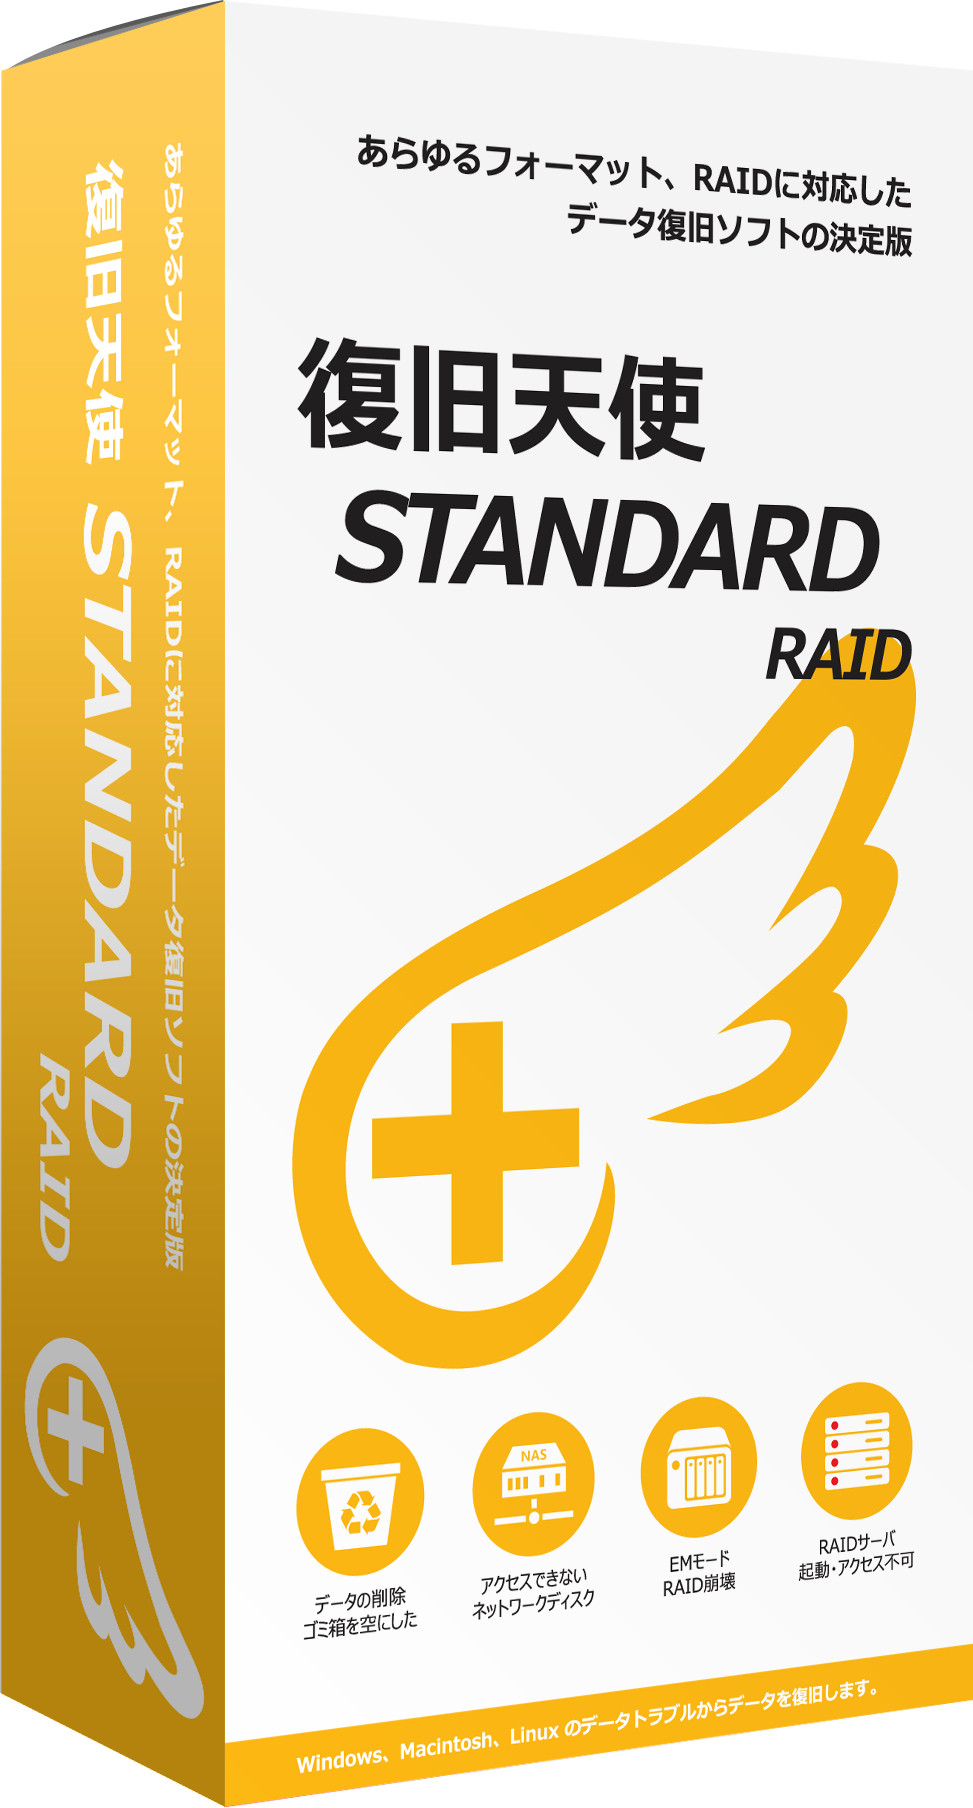 Standard RAID